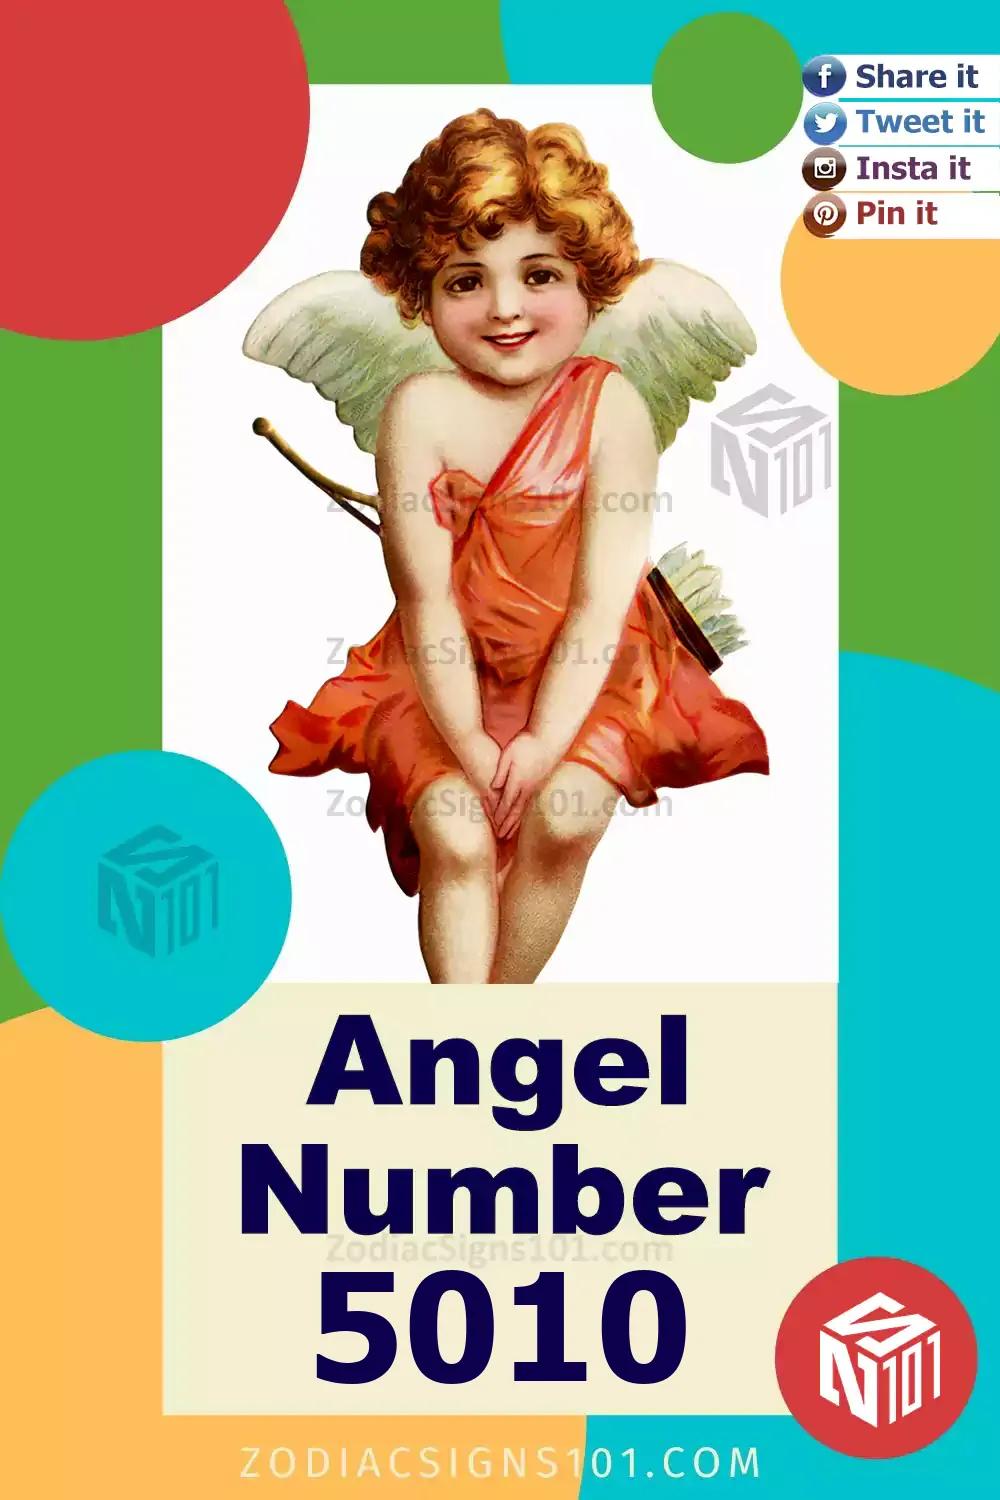 5010-Angel-Number-Meaning.jpg